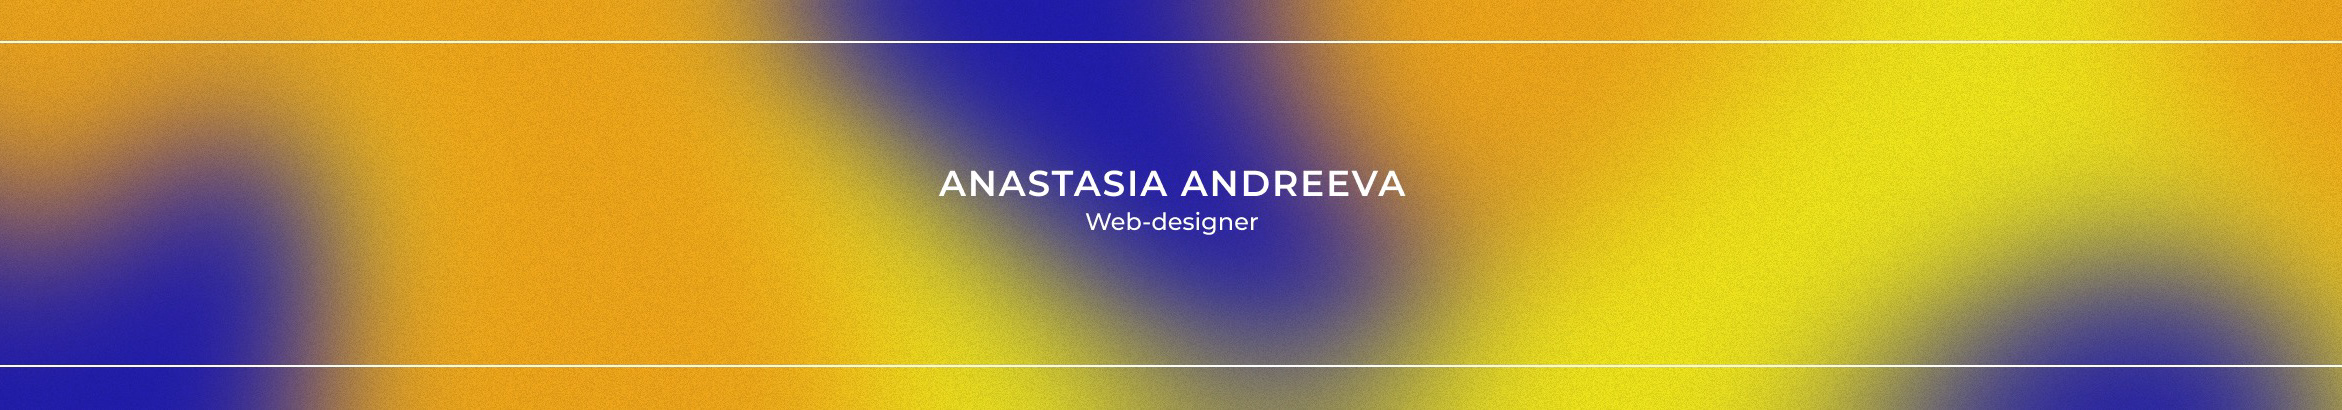 Banner de perfil de Anastasia Andreeva